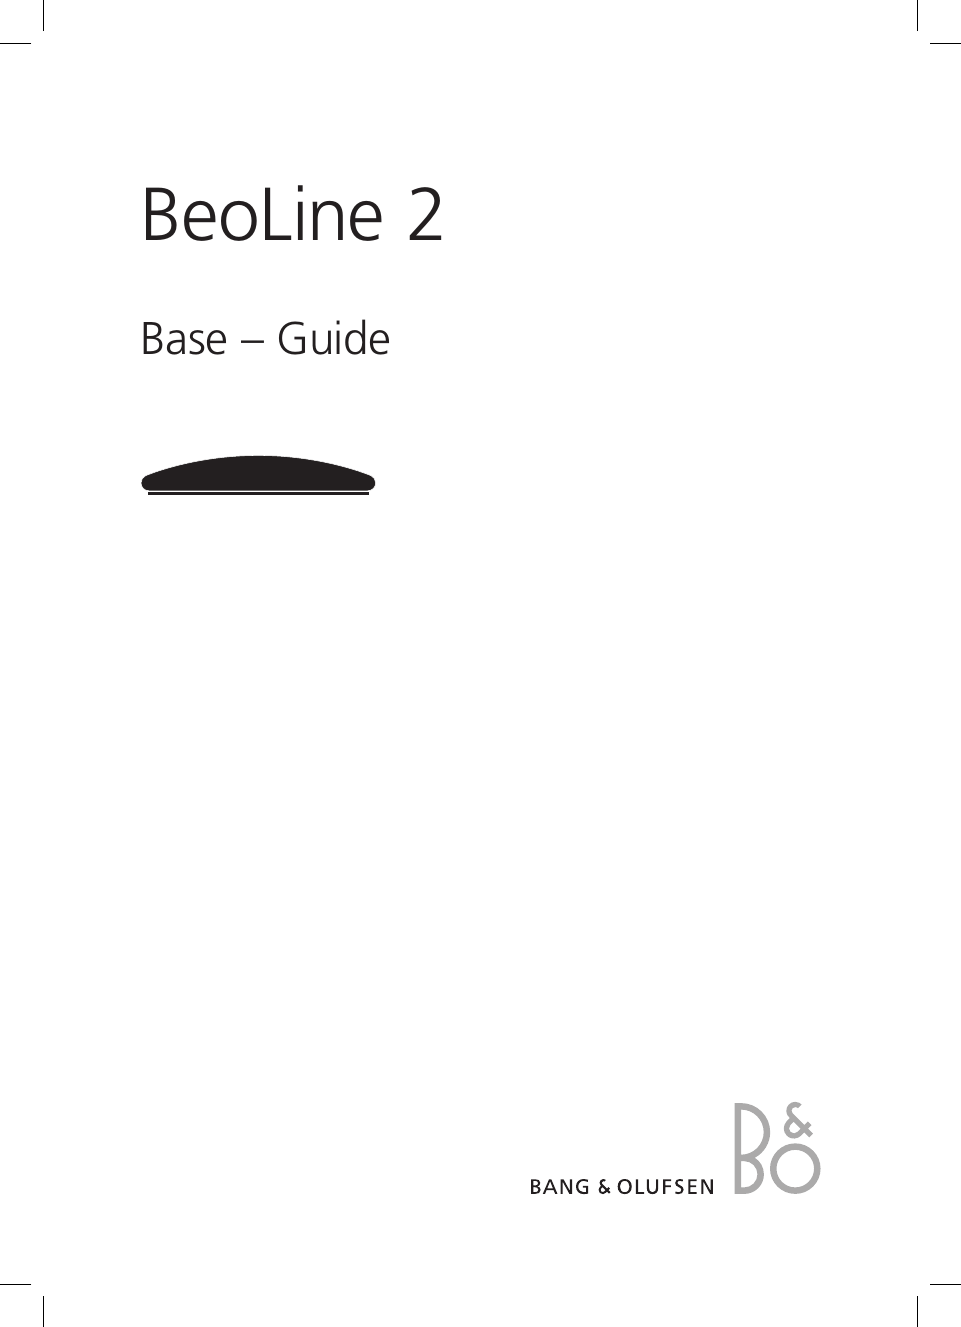 BeoLine 2 Base – Guide 